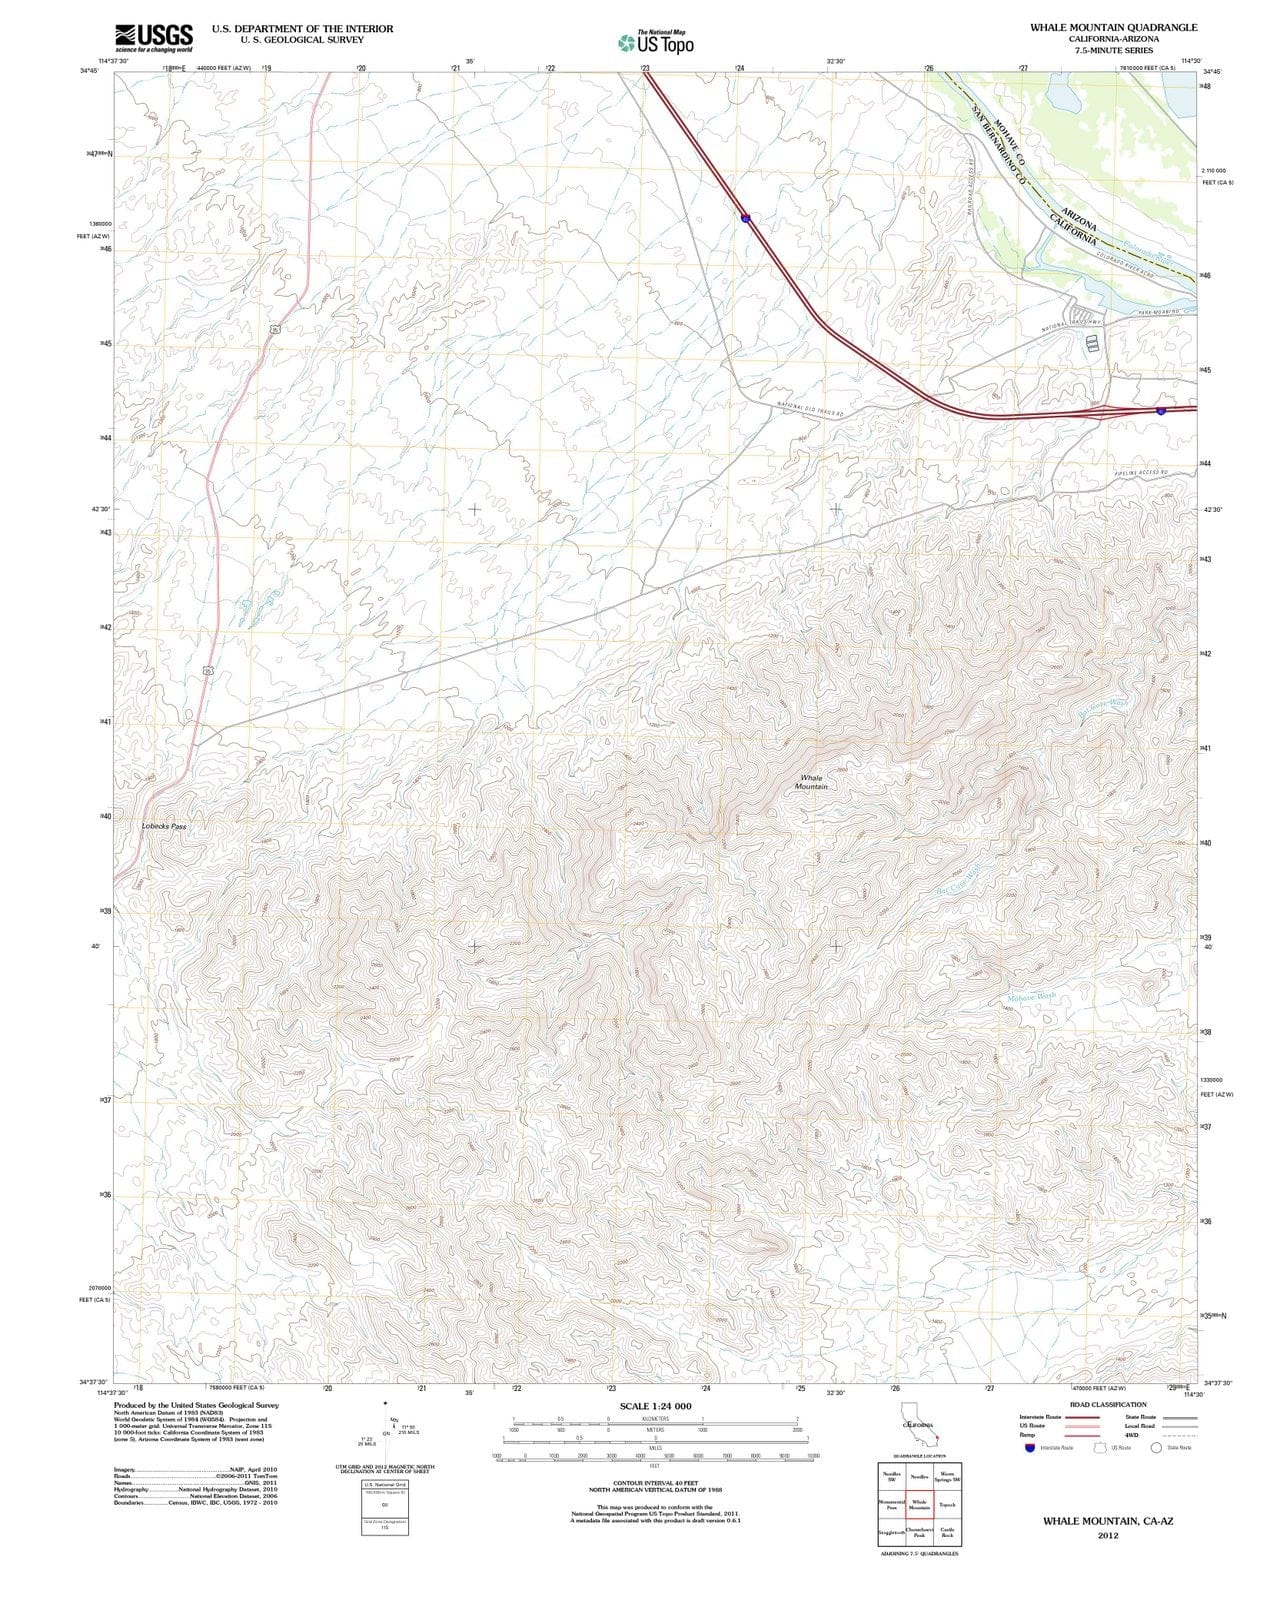 2012 Whale Mountain, CA - California - USGS Topographic Map